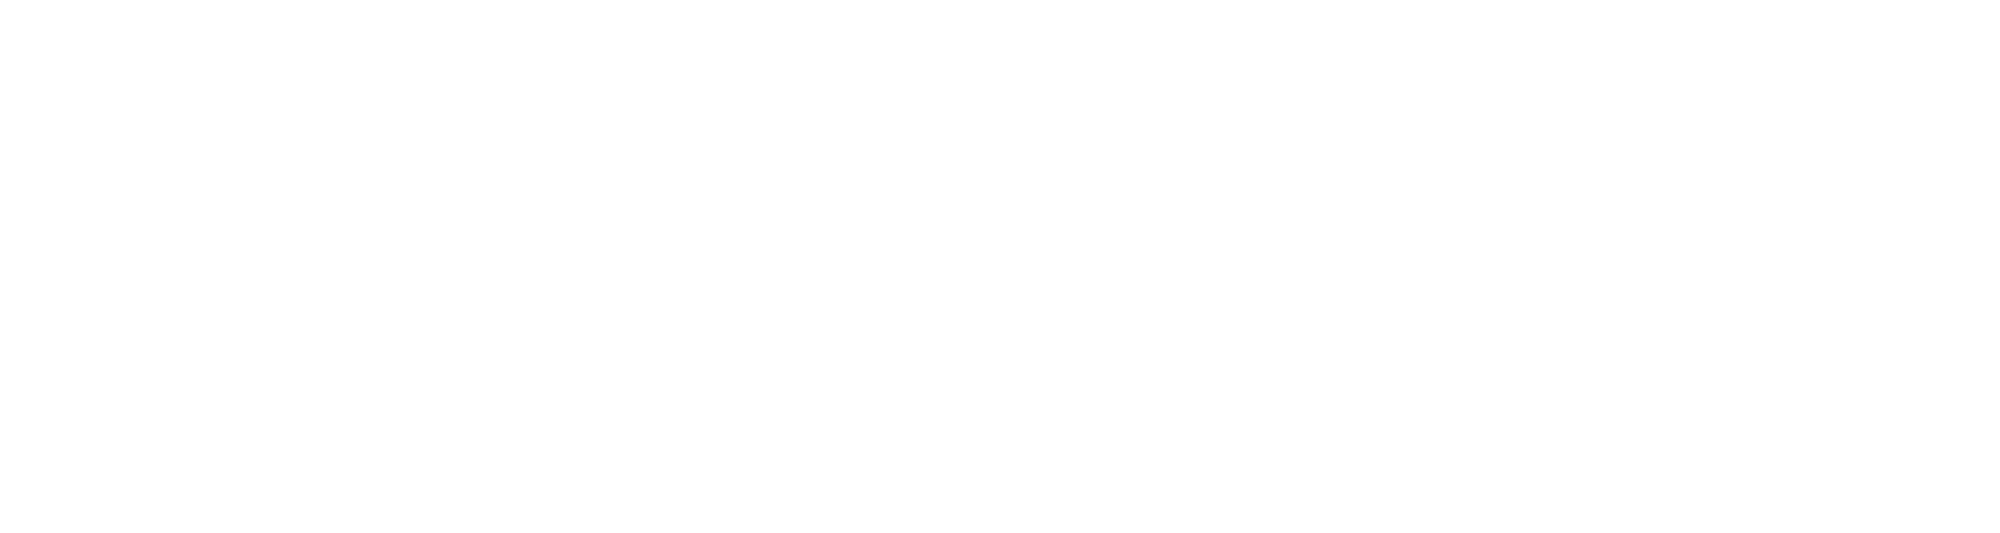 Original Story, General Producer：Eiichiro Oda　Director：Goro Taniguchi Dcript：Tsutomu Kuroiwa